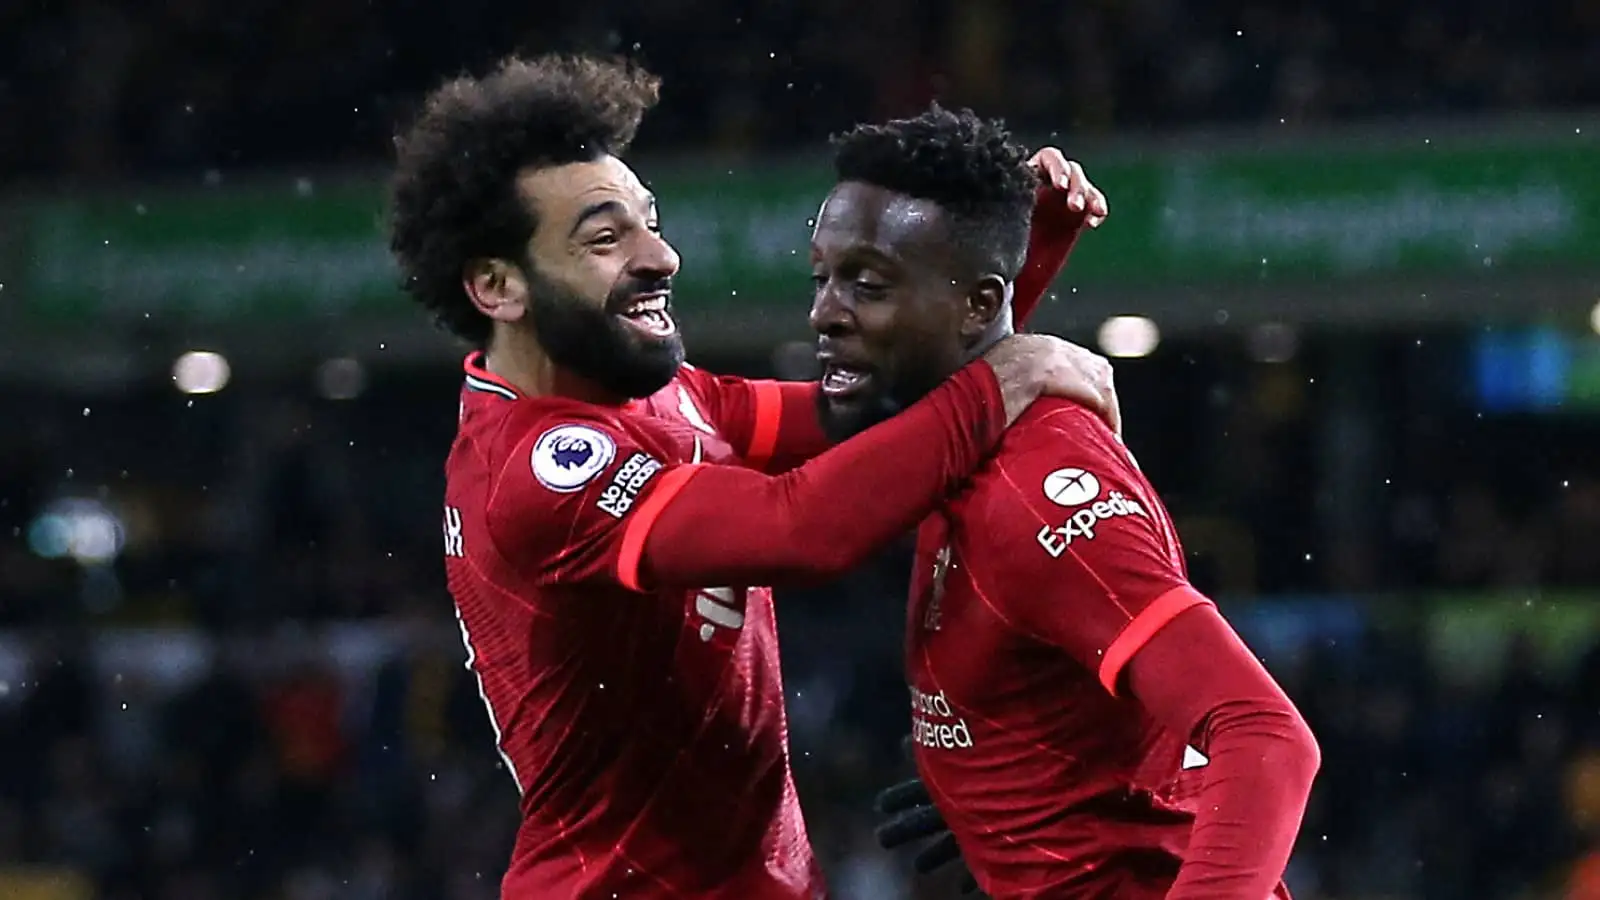 Liverpool forwards Mohamed Salah and Divock Origi celebrating